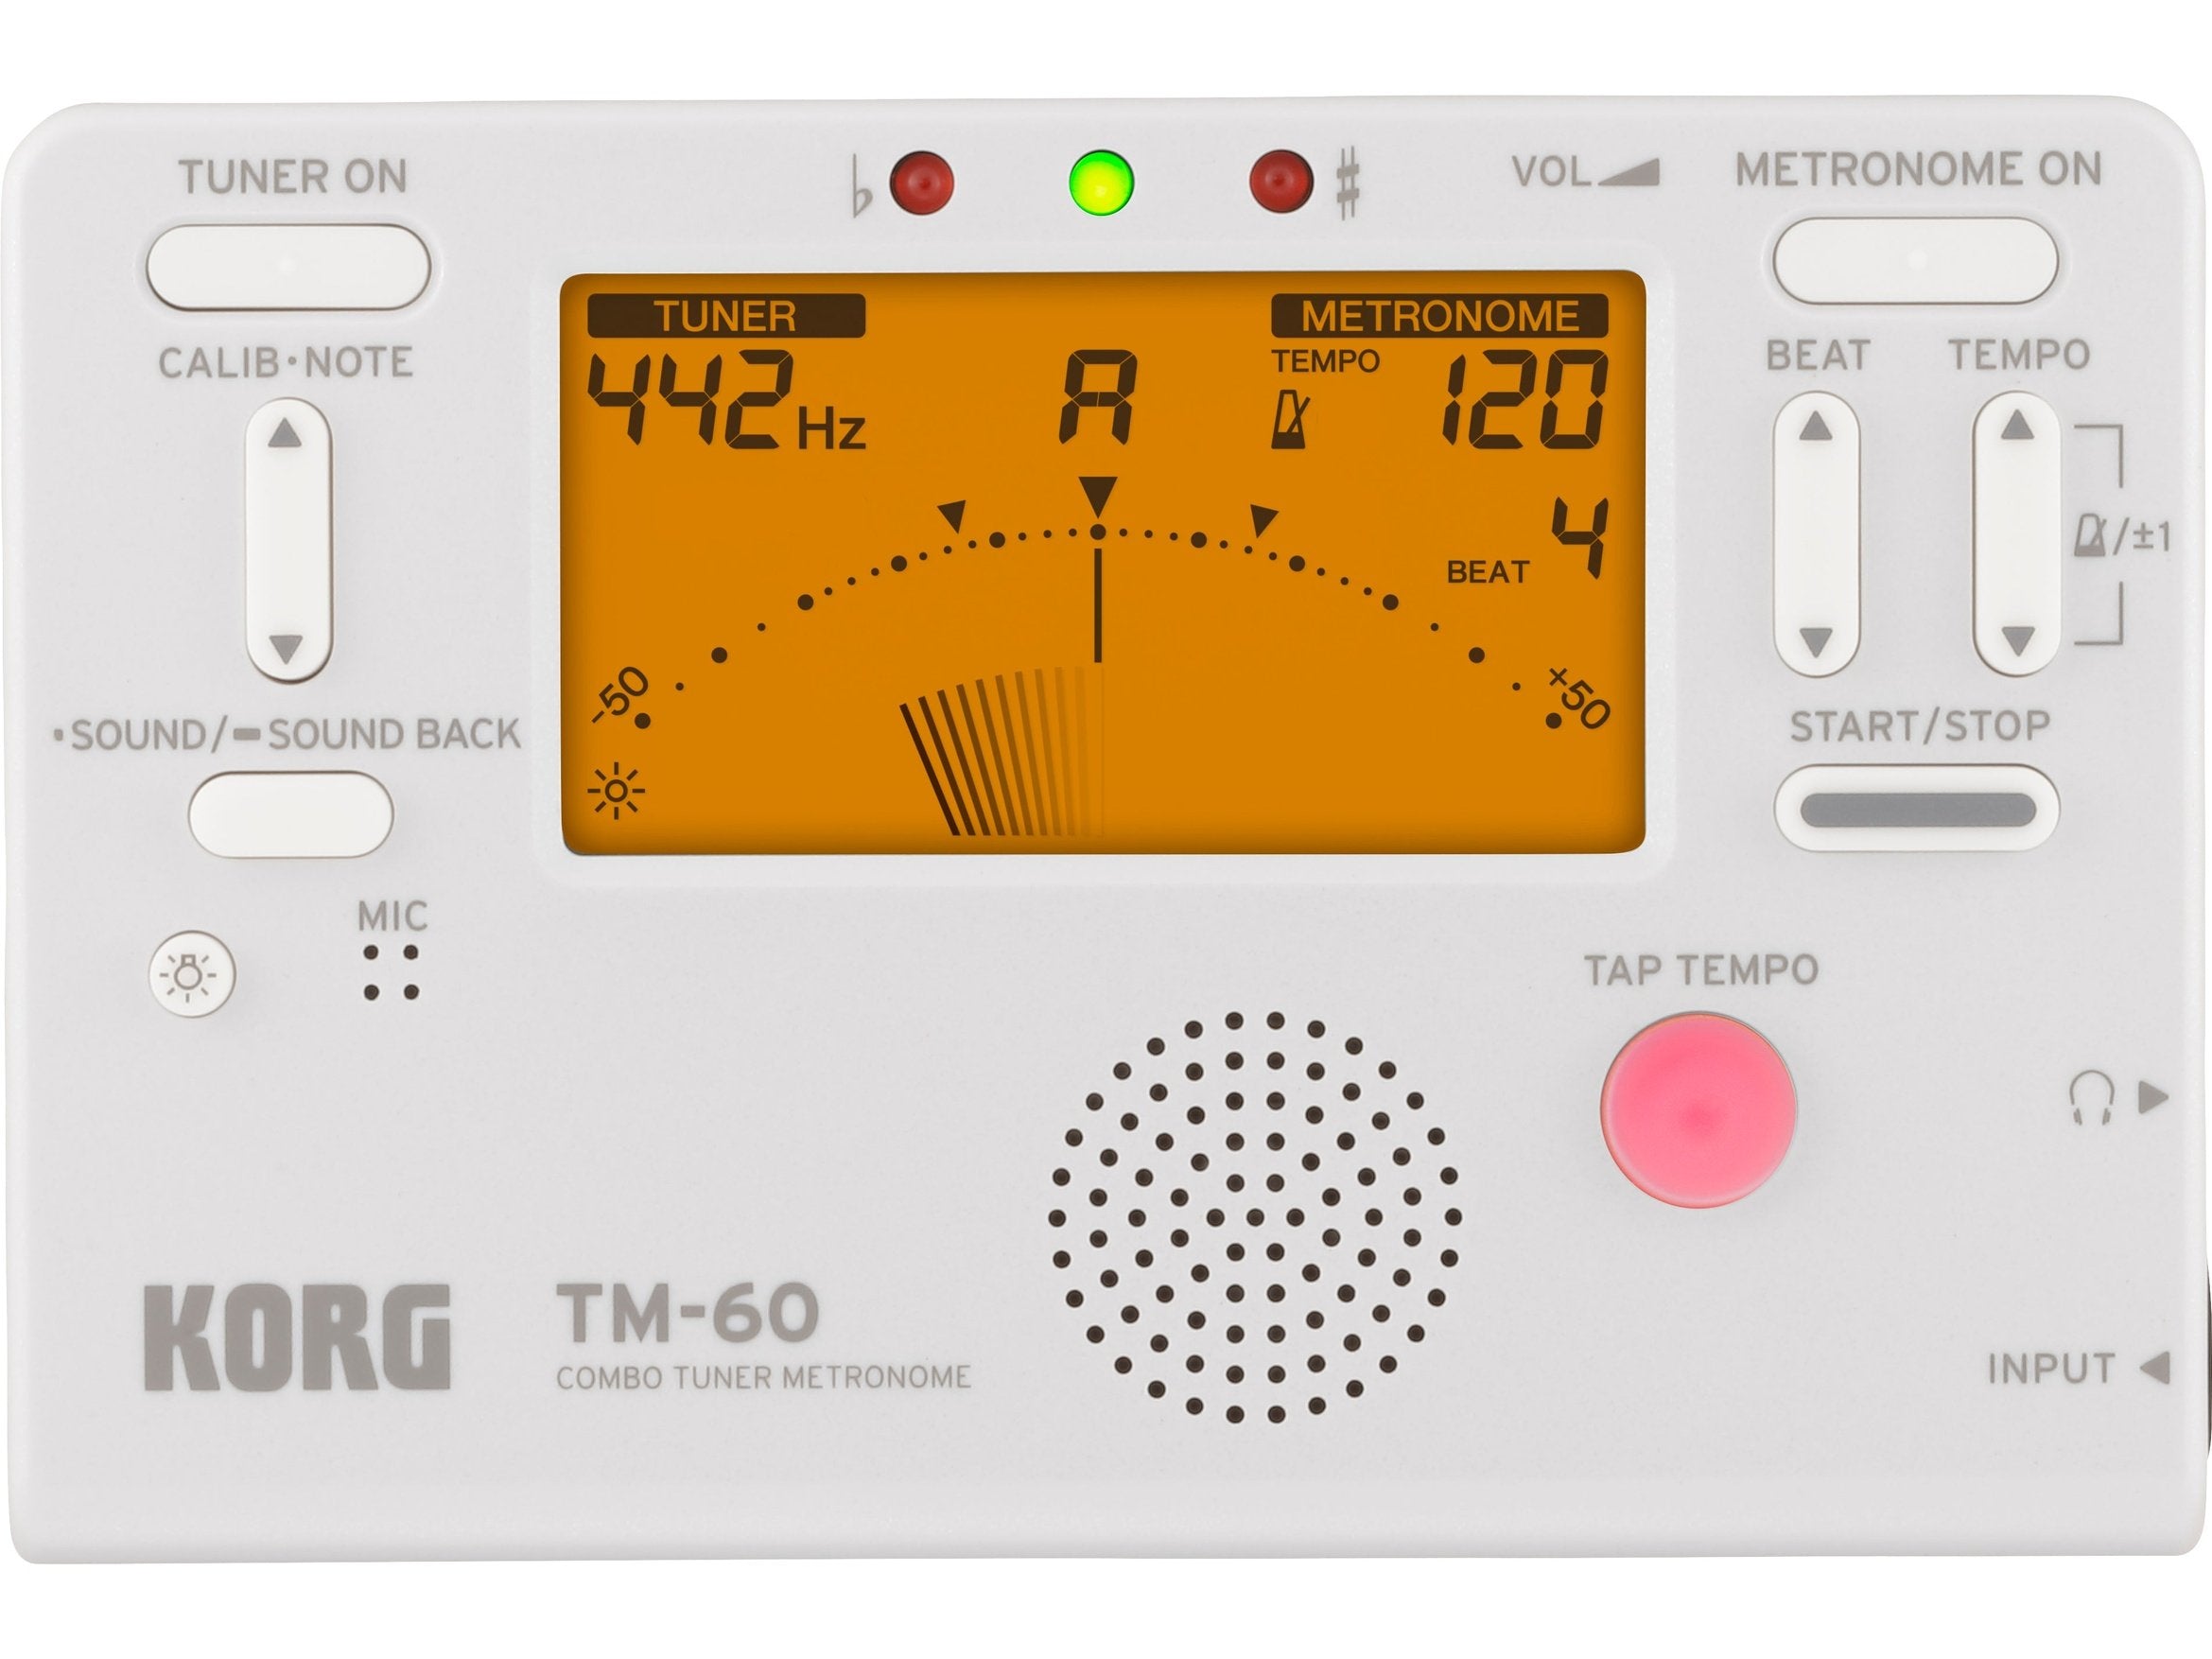 Korg TM-60 Combo Tuner Metronome - Black 2